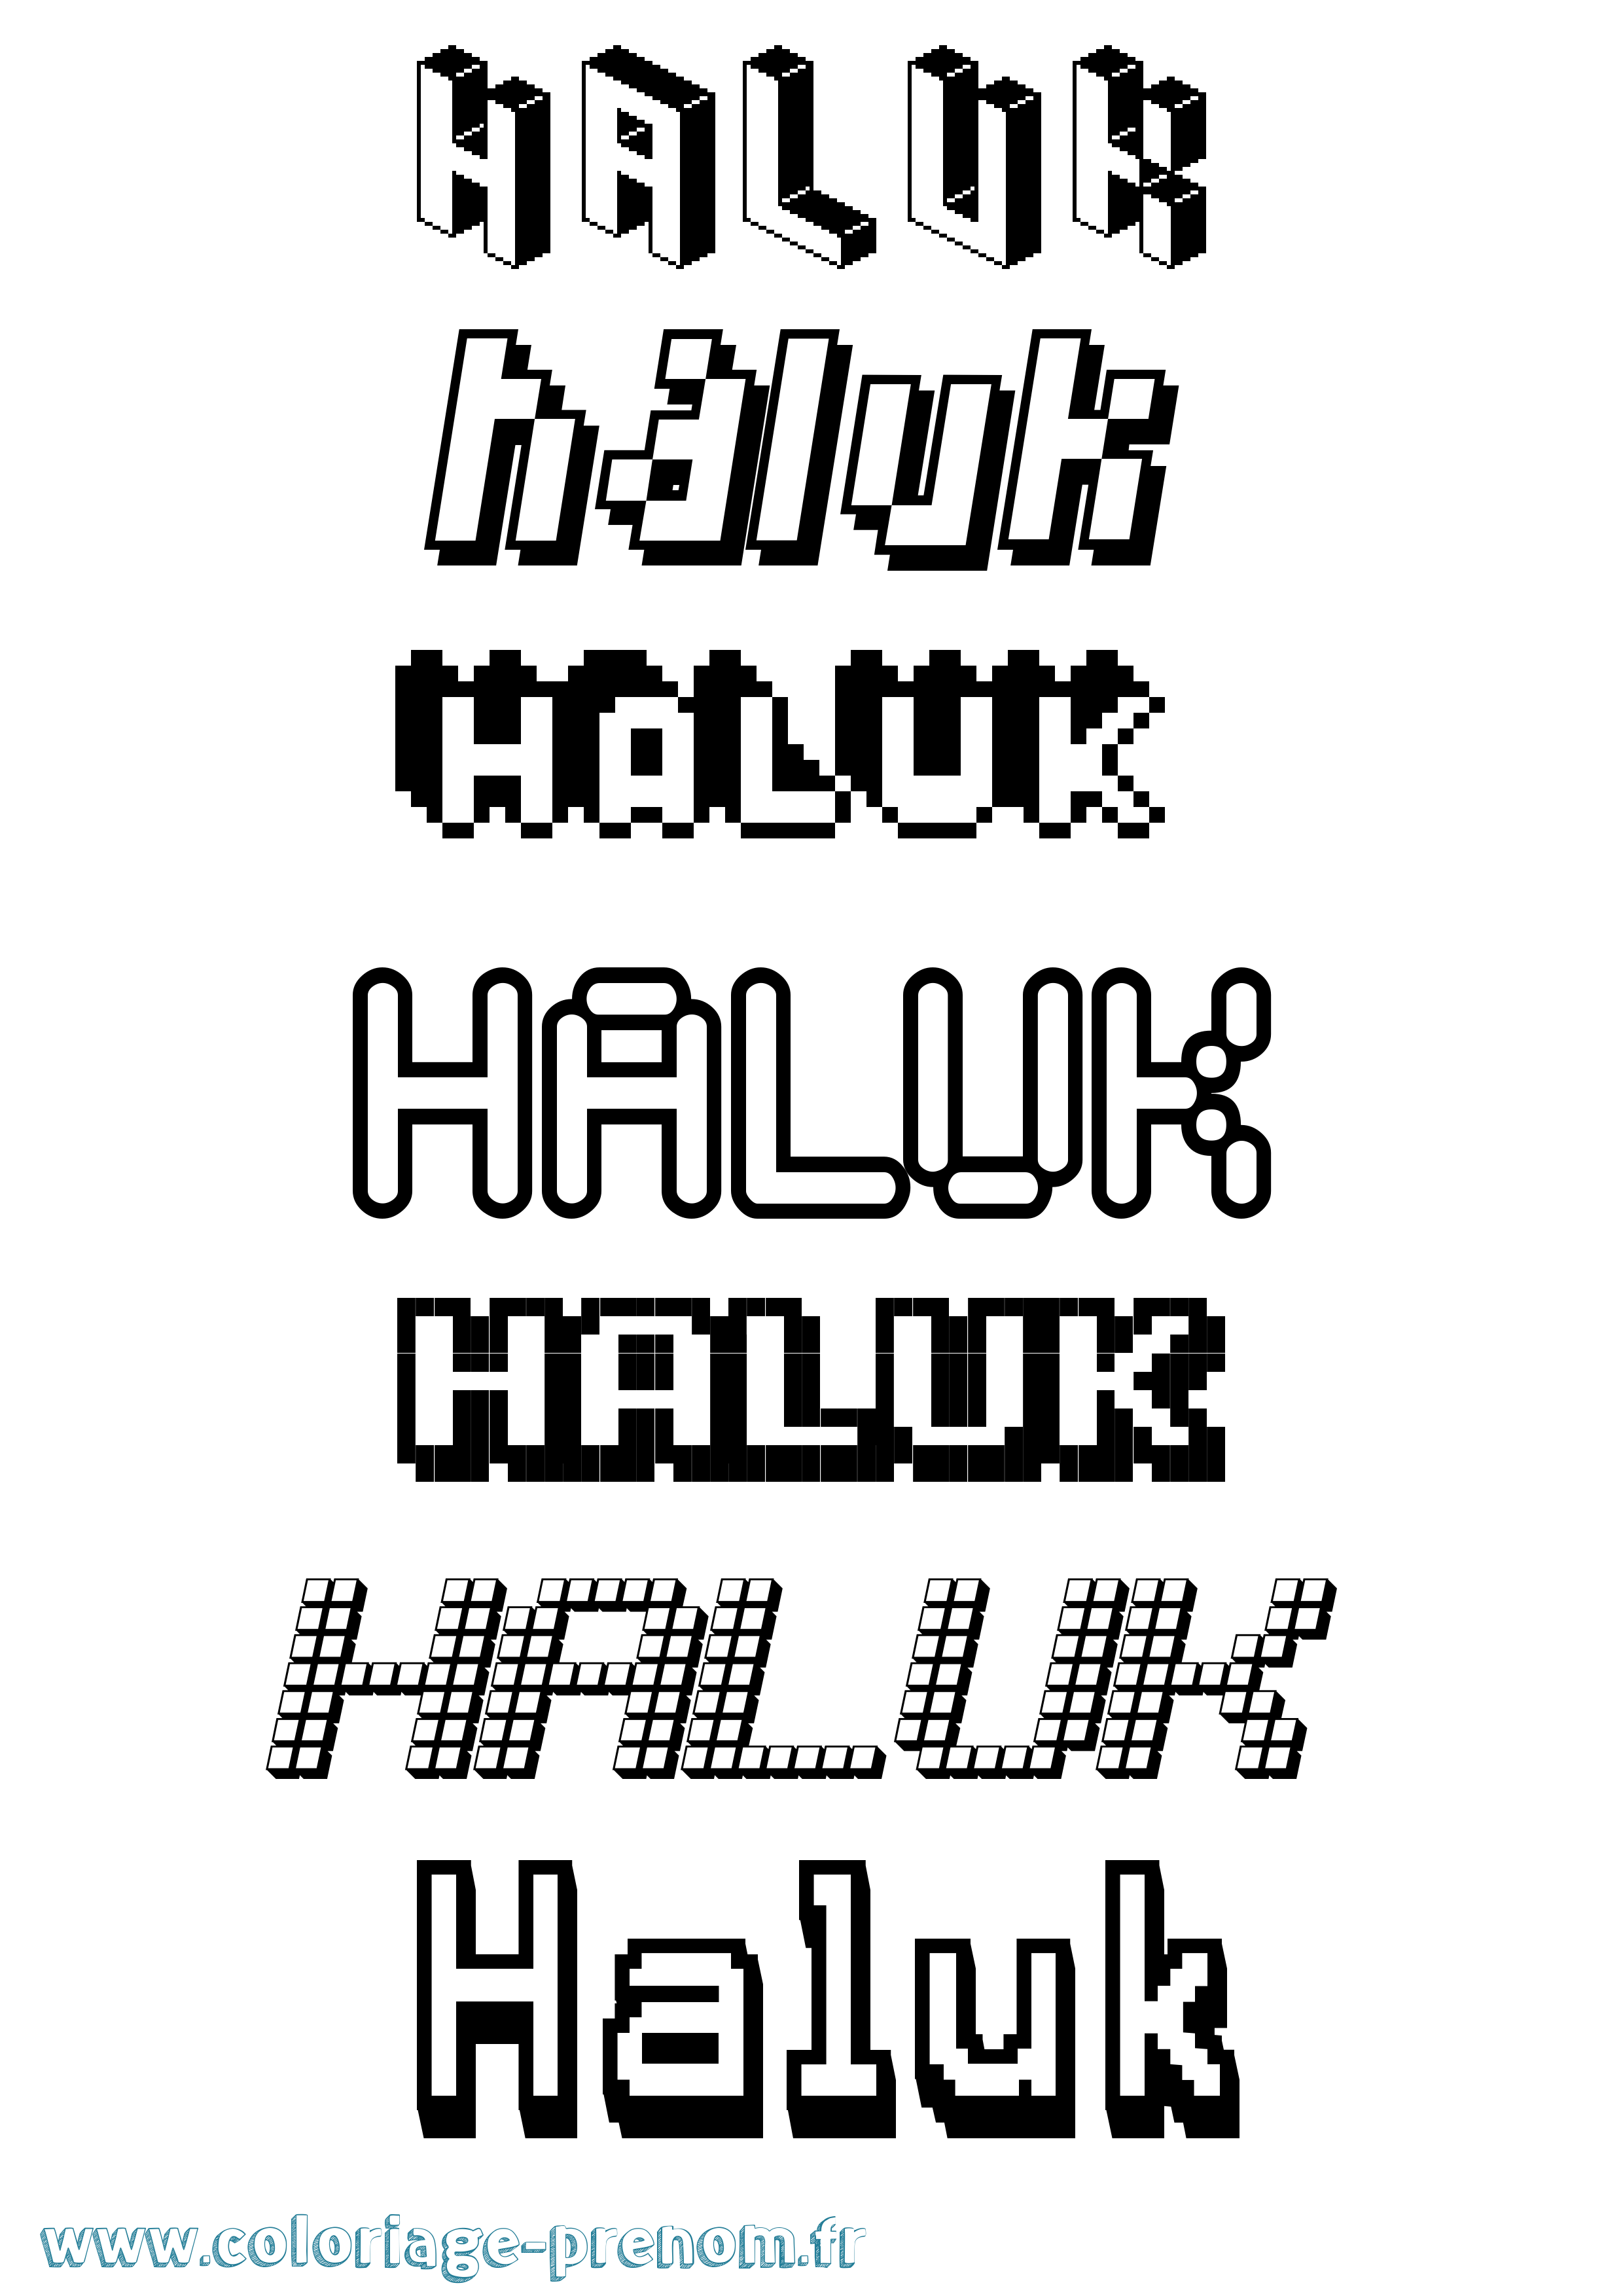 Coloriage prénom Haluk Pixel